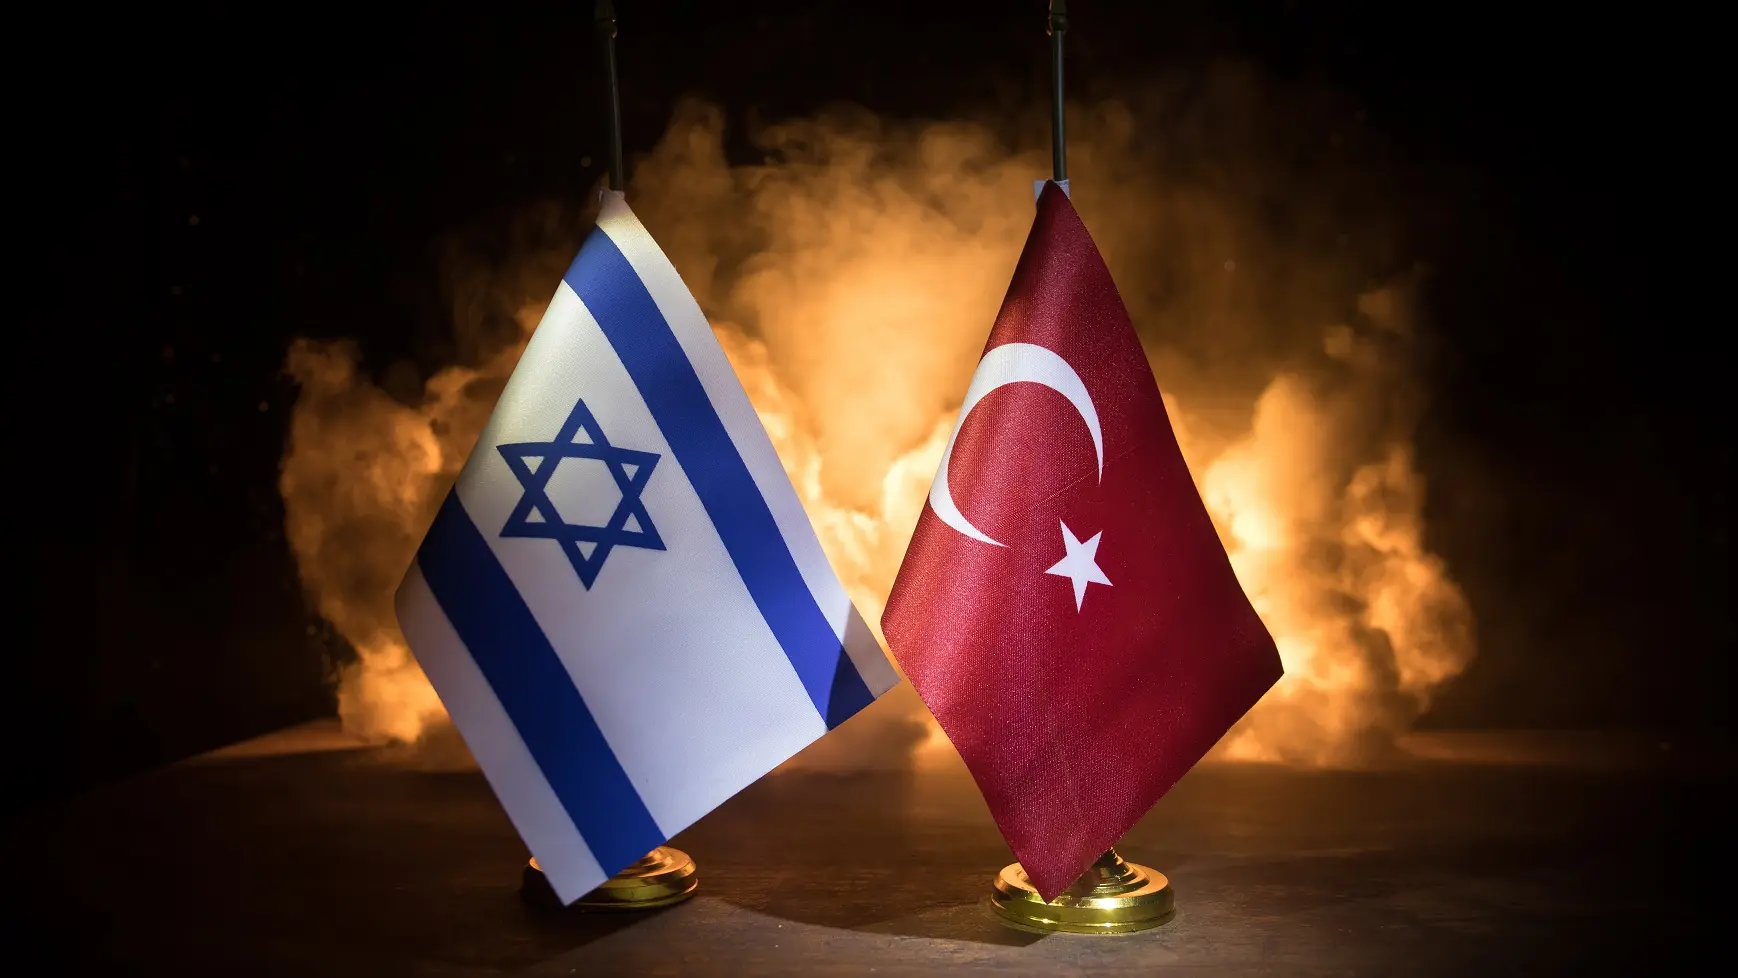 izrael turska, izraelska turska zastava, zastave - shutterstock-6633f0d177042.webp